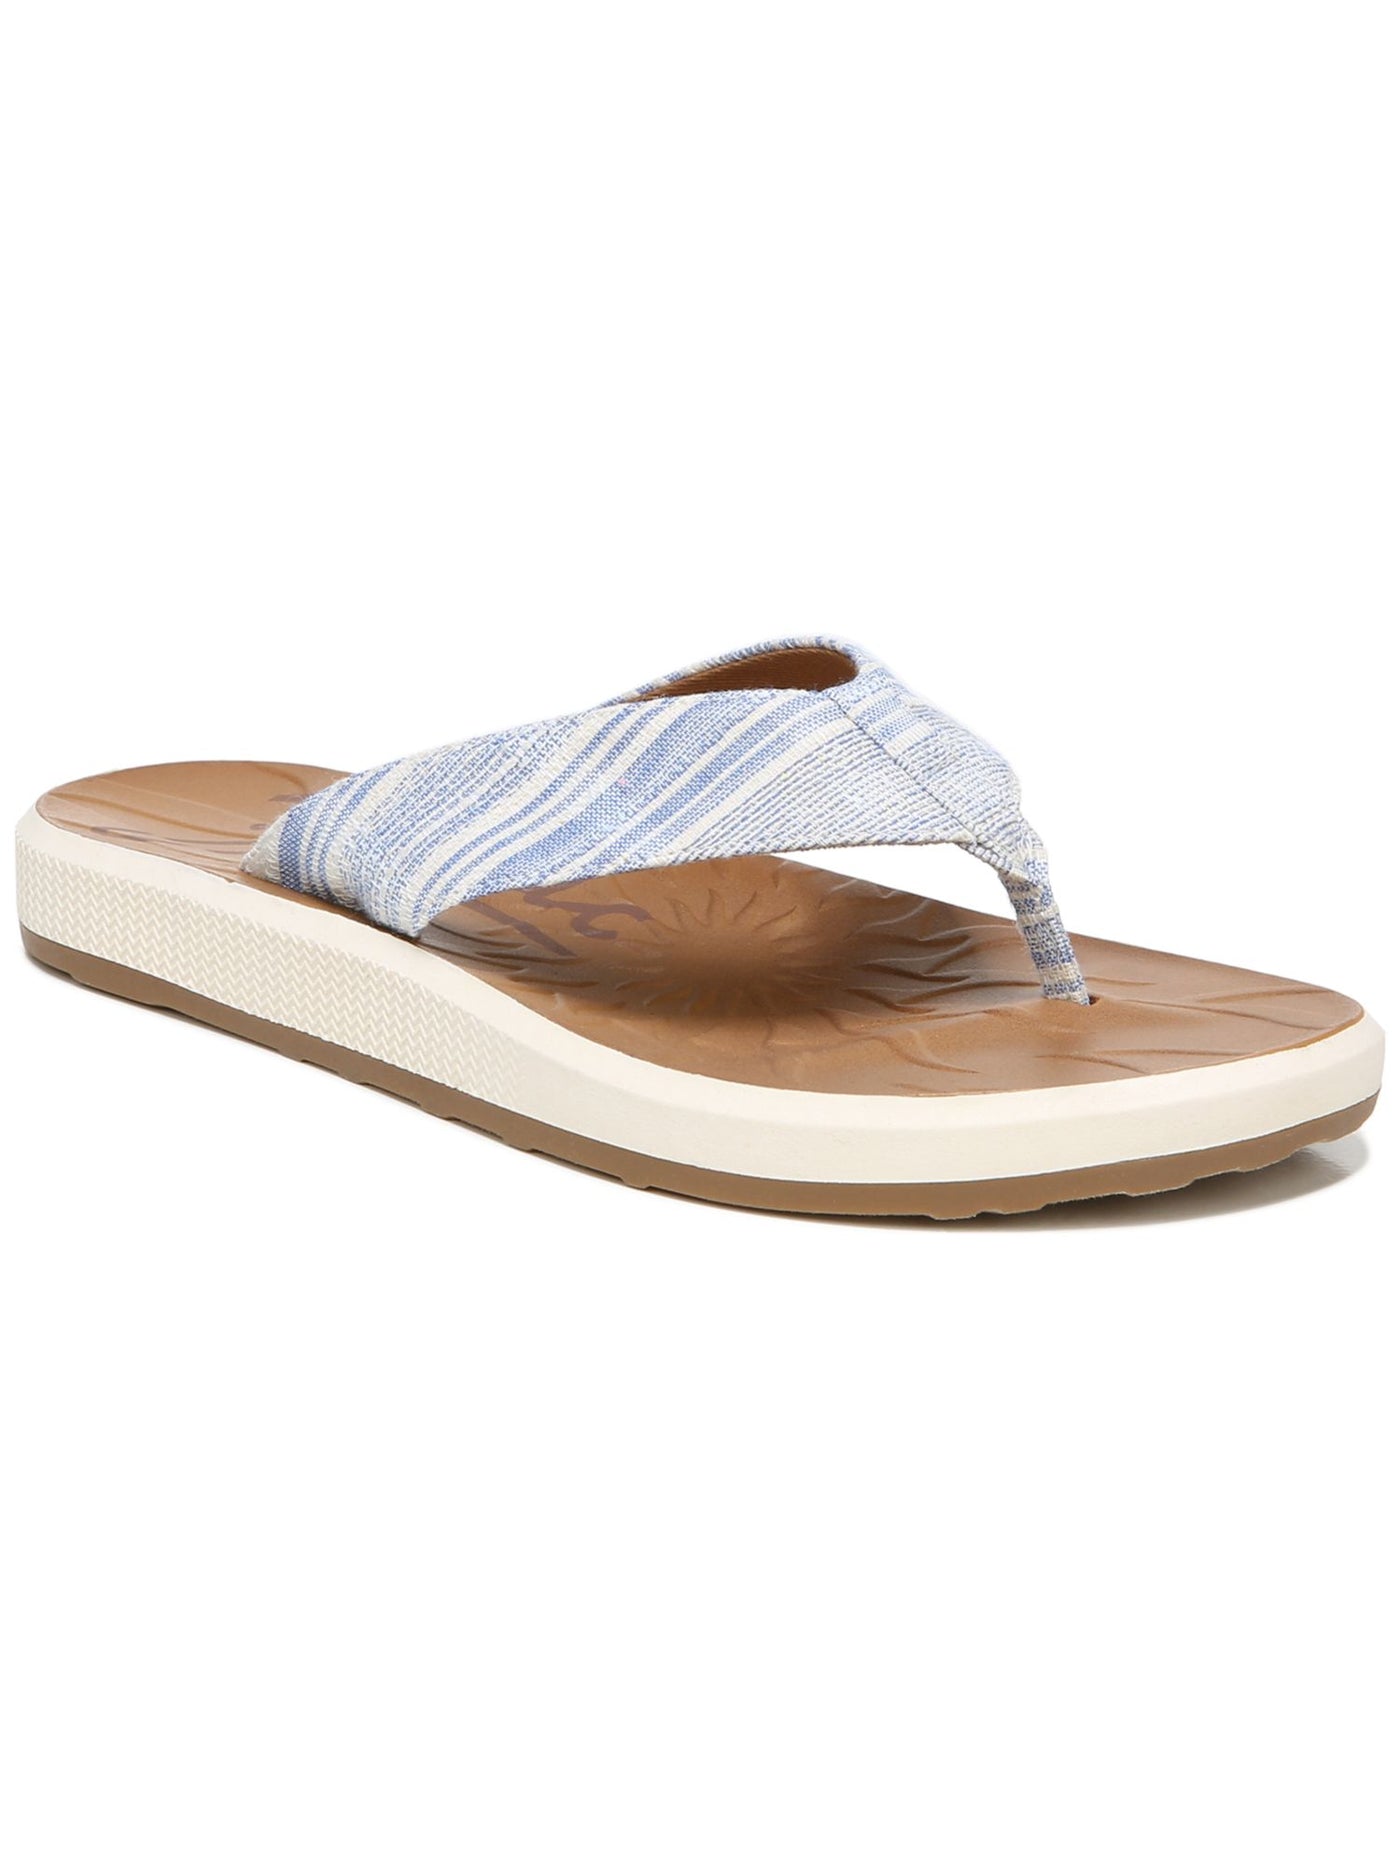 ZODIAC Womens Light Blue Striped Sunny Round Toe Slip On Flip Flop Sandal 8.5 M